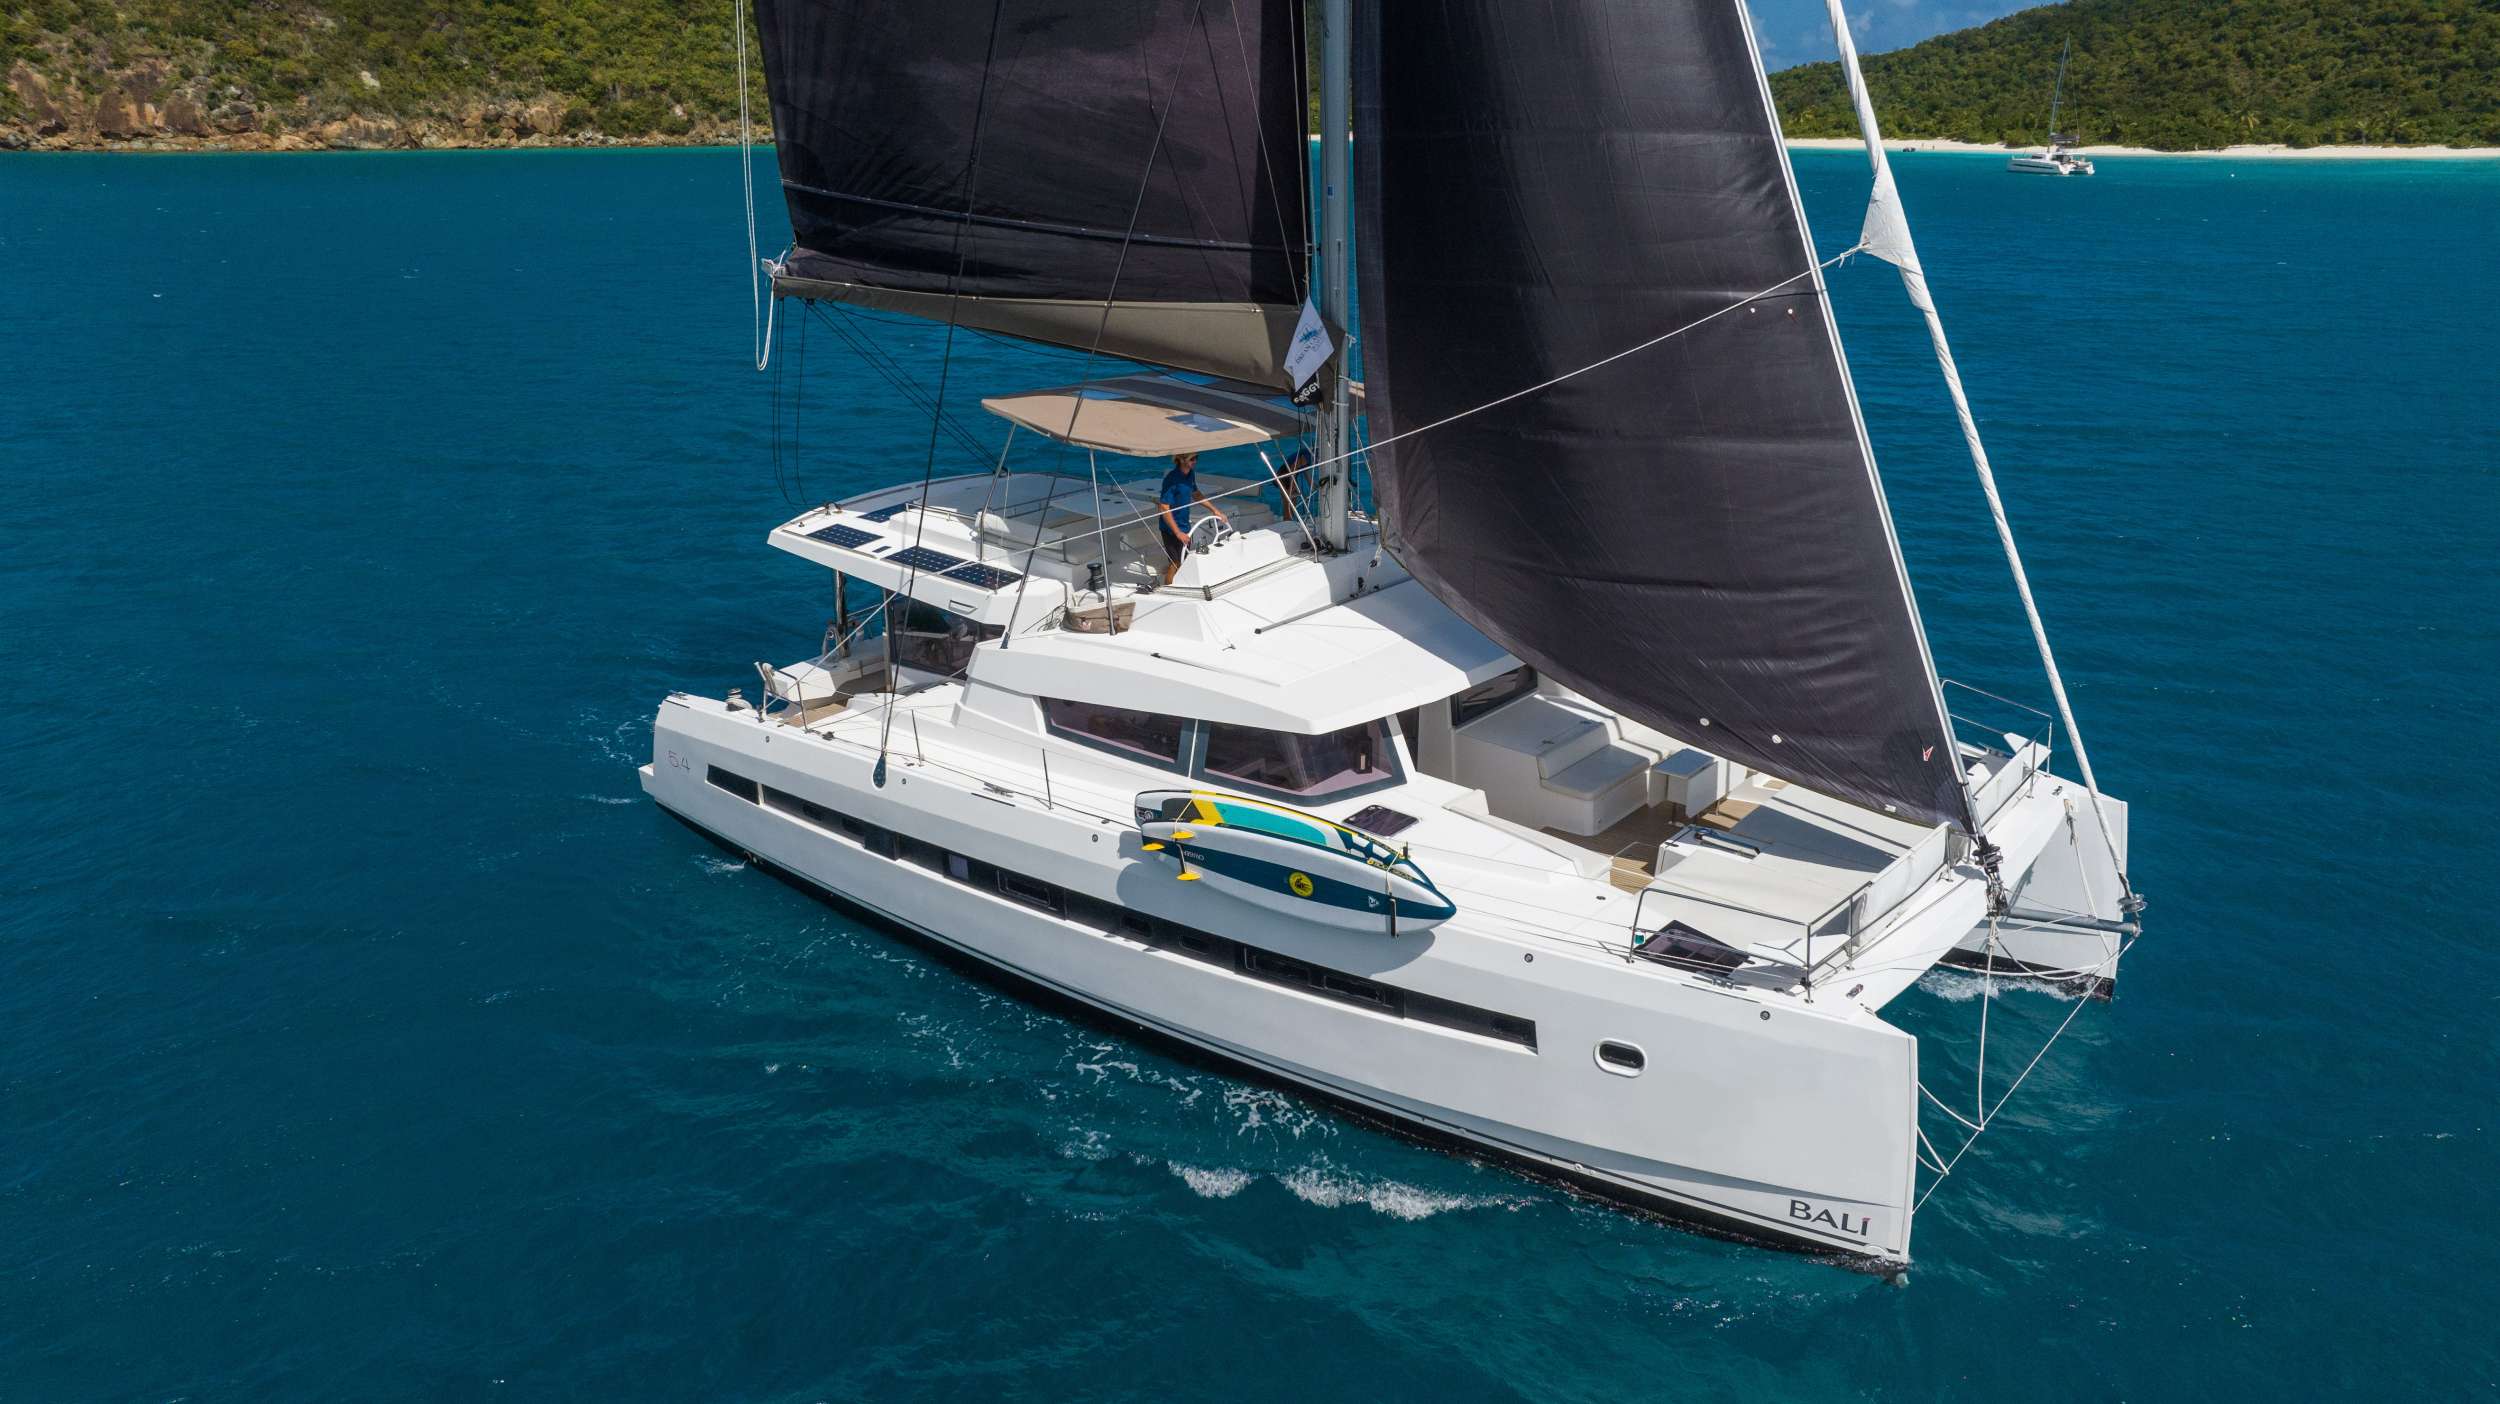 SUN DAZE 5.4 - Yacht Charter Netherlands Antilles & Boat hire in Caribbean 1